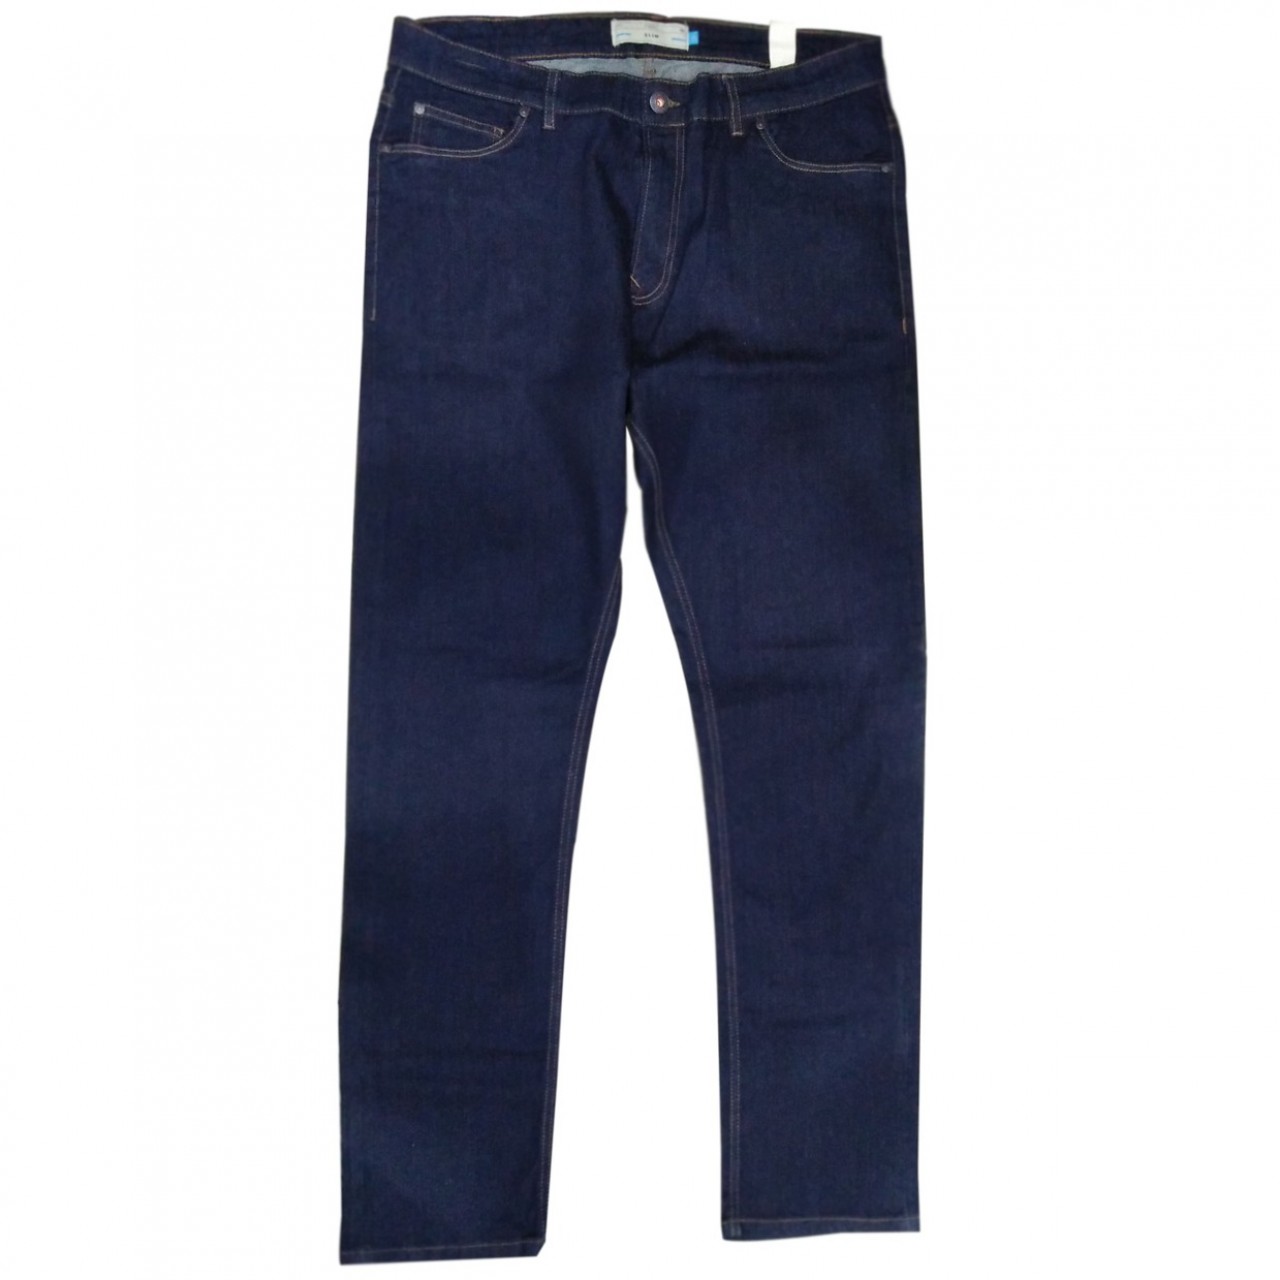 Denim Slim Fit Jeans Pant For Men - Dark Blue - 28” to 44”